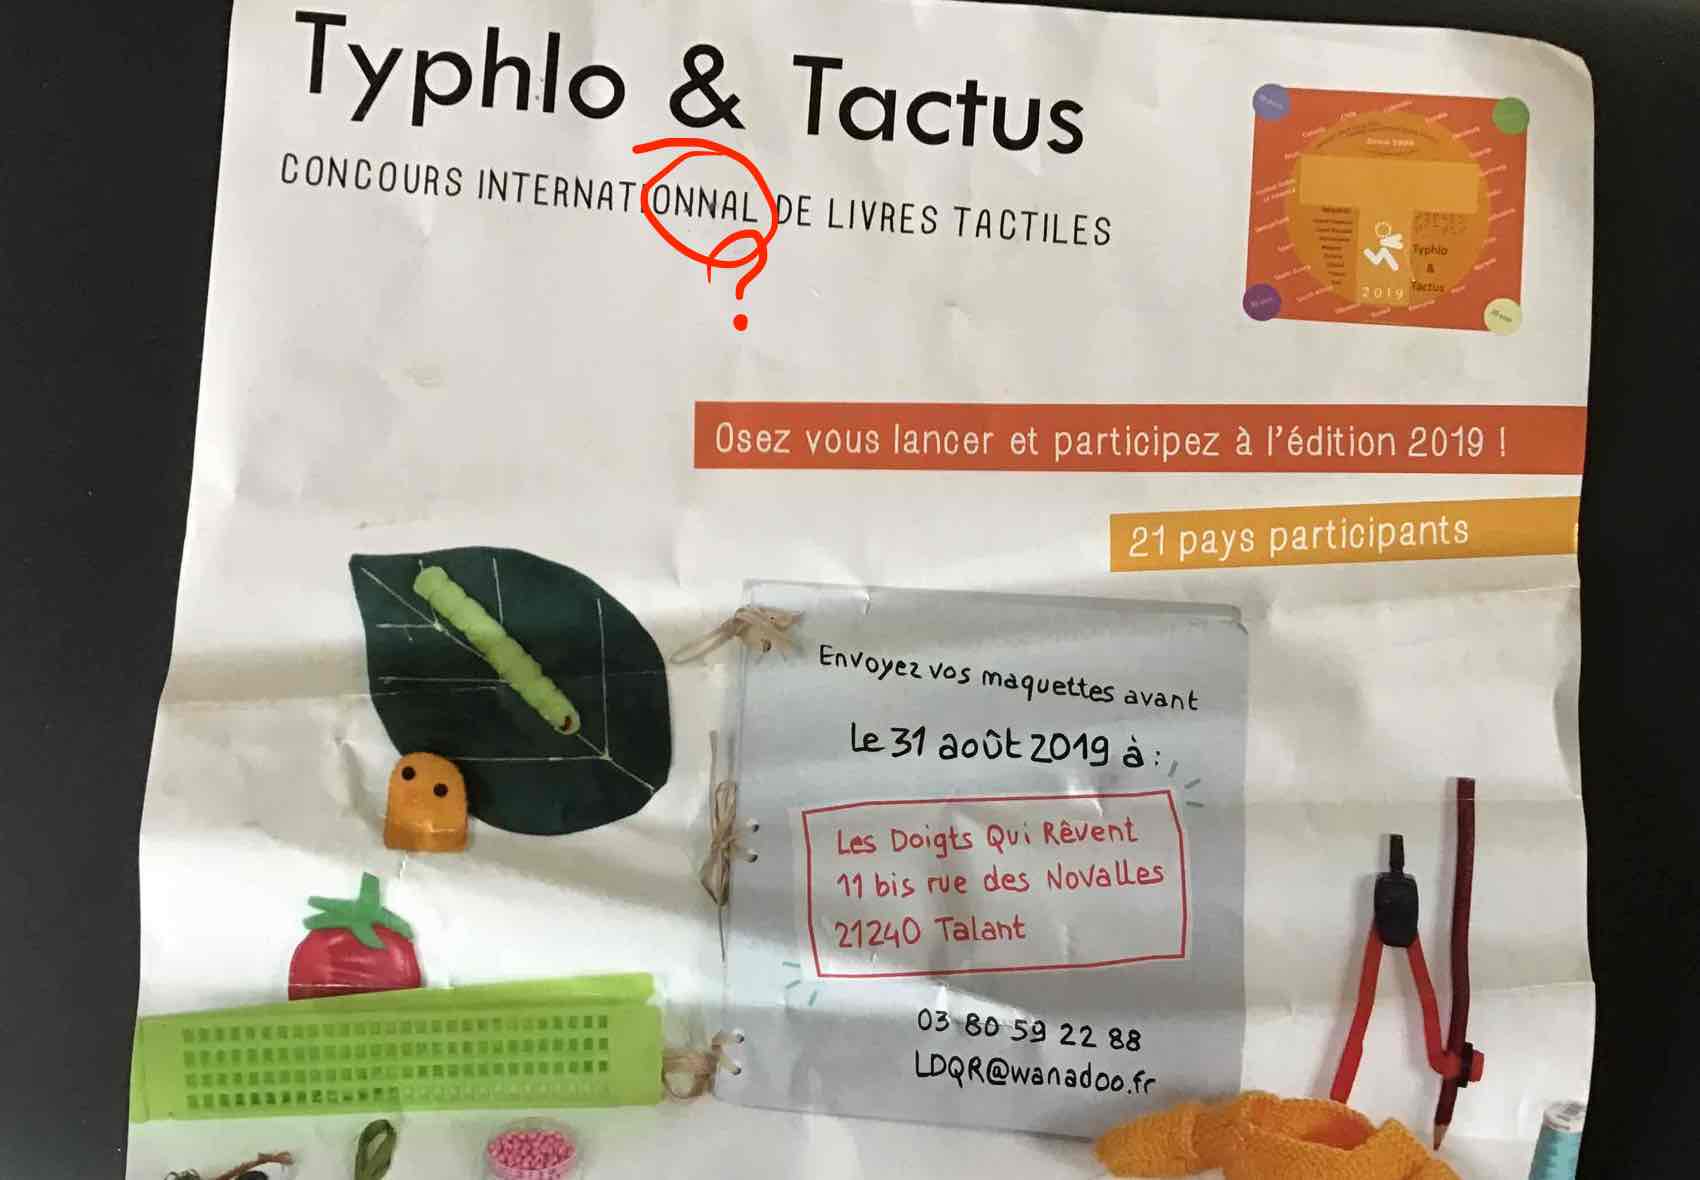 Typhlo & Tactus